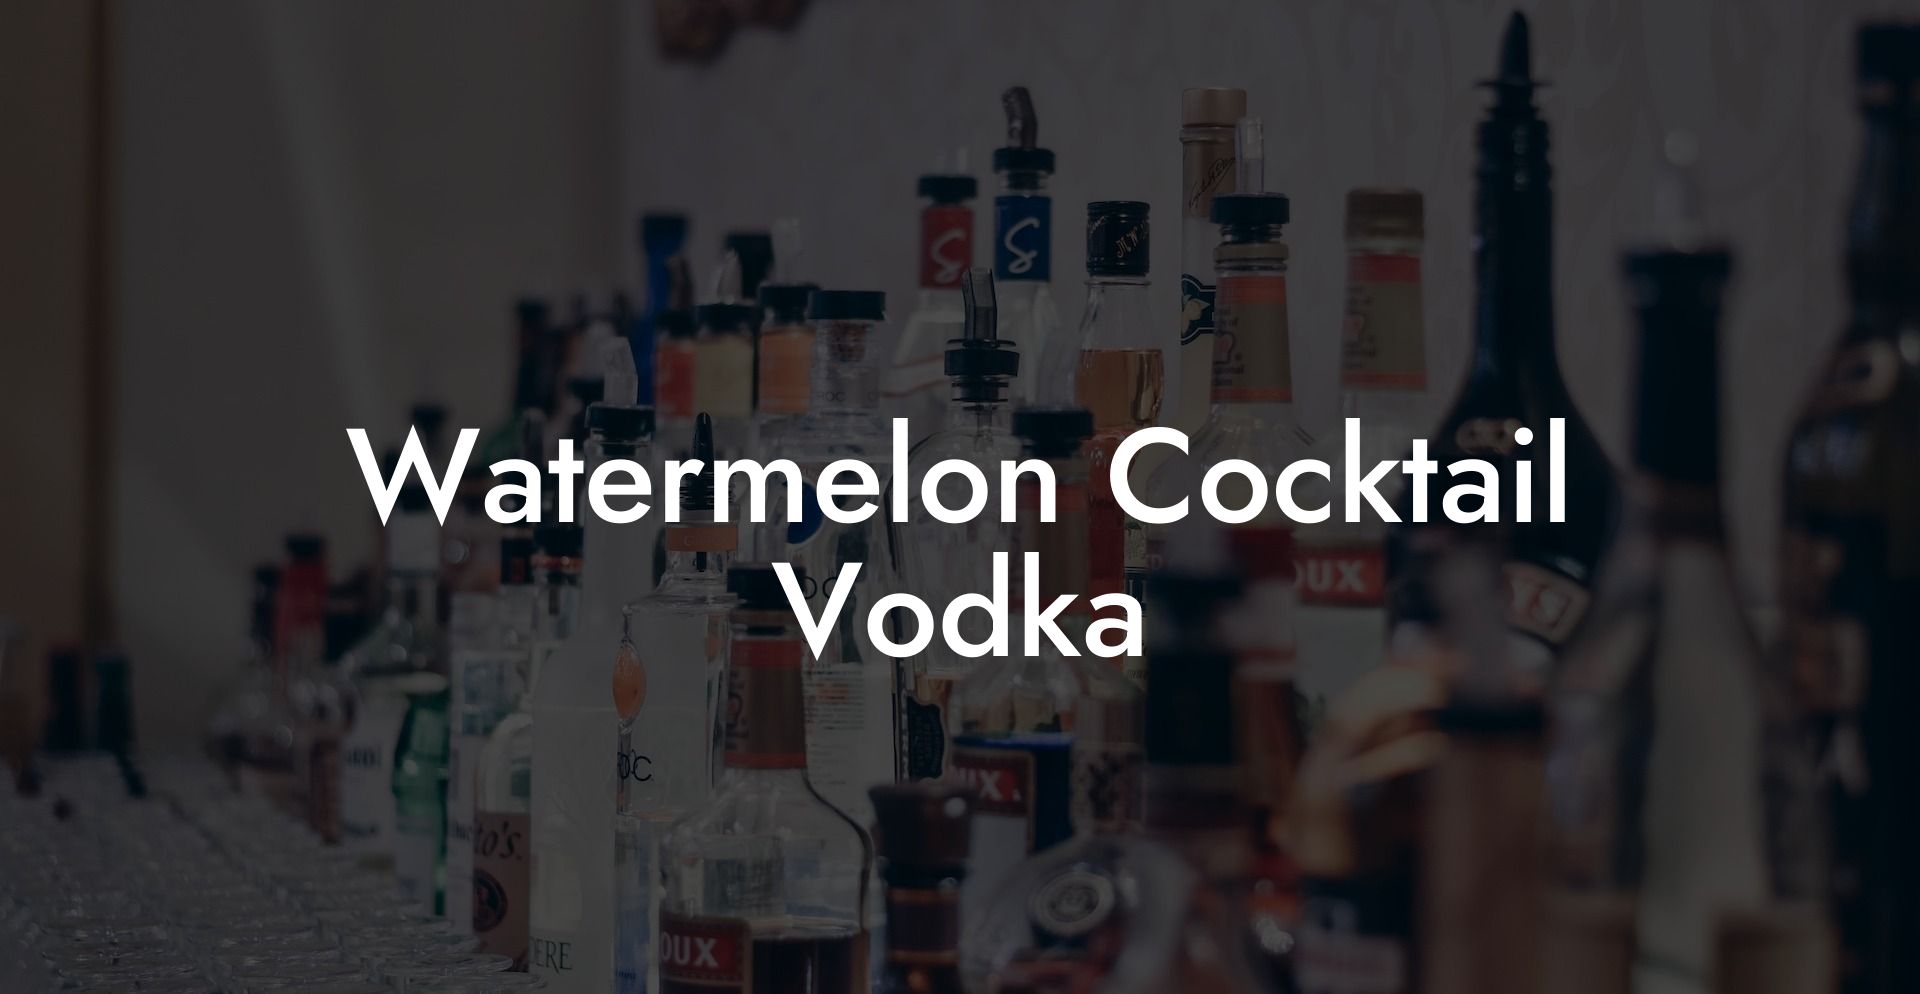 Watermelon Cocktail Vodka